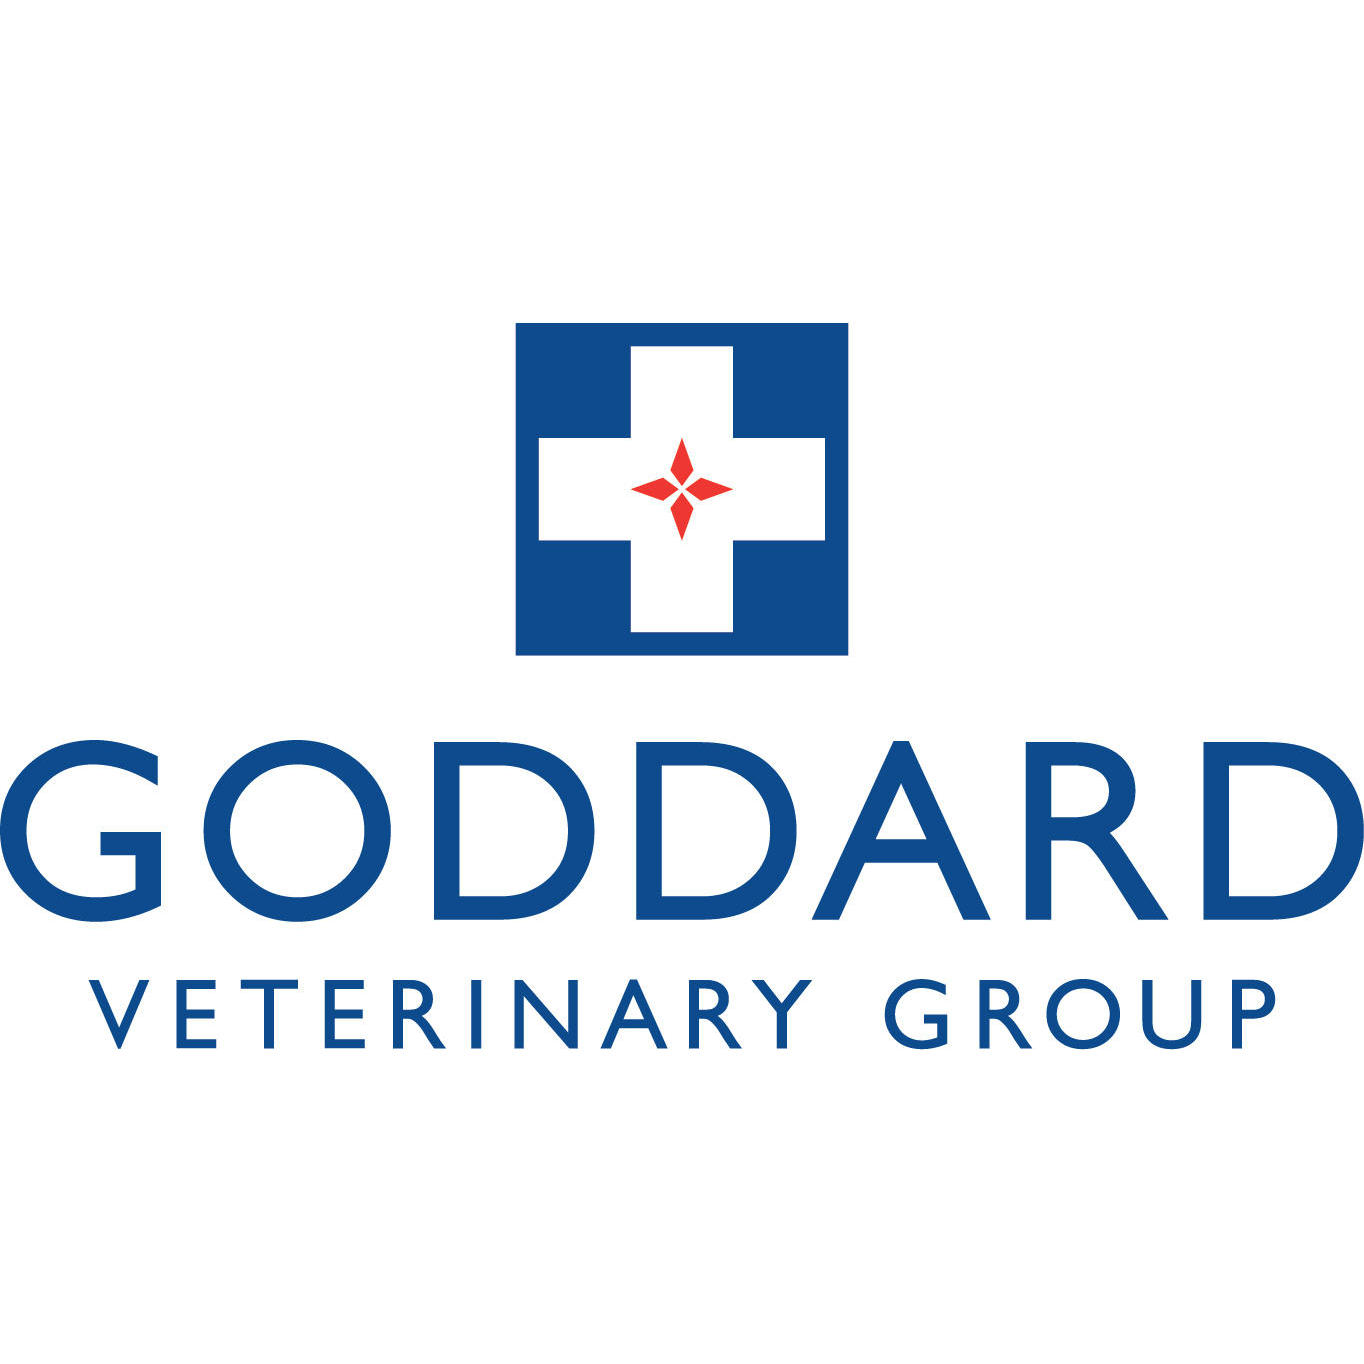 Goddard Veterinary Group, Enfield - Enfield, London EN3 7HG - 020 8443 4556 | ShowMeLocal.com